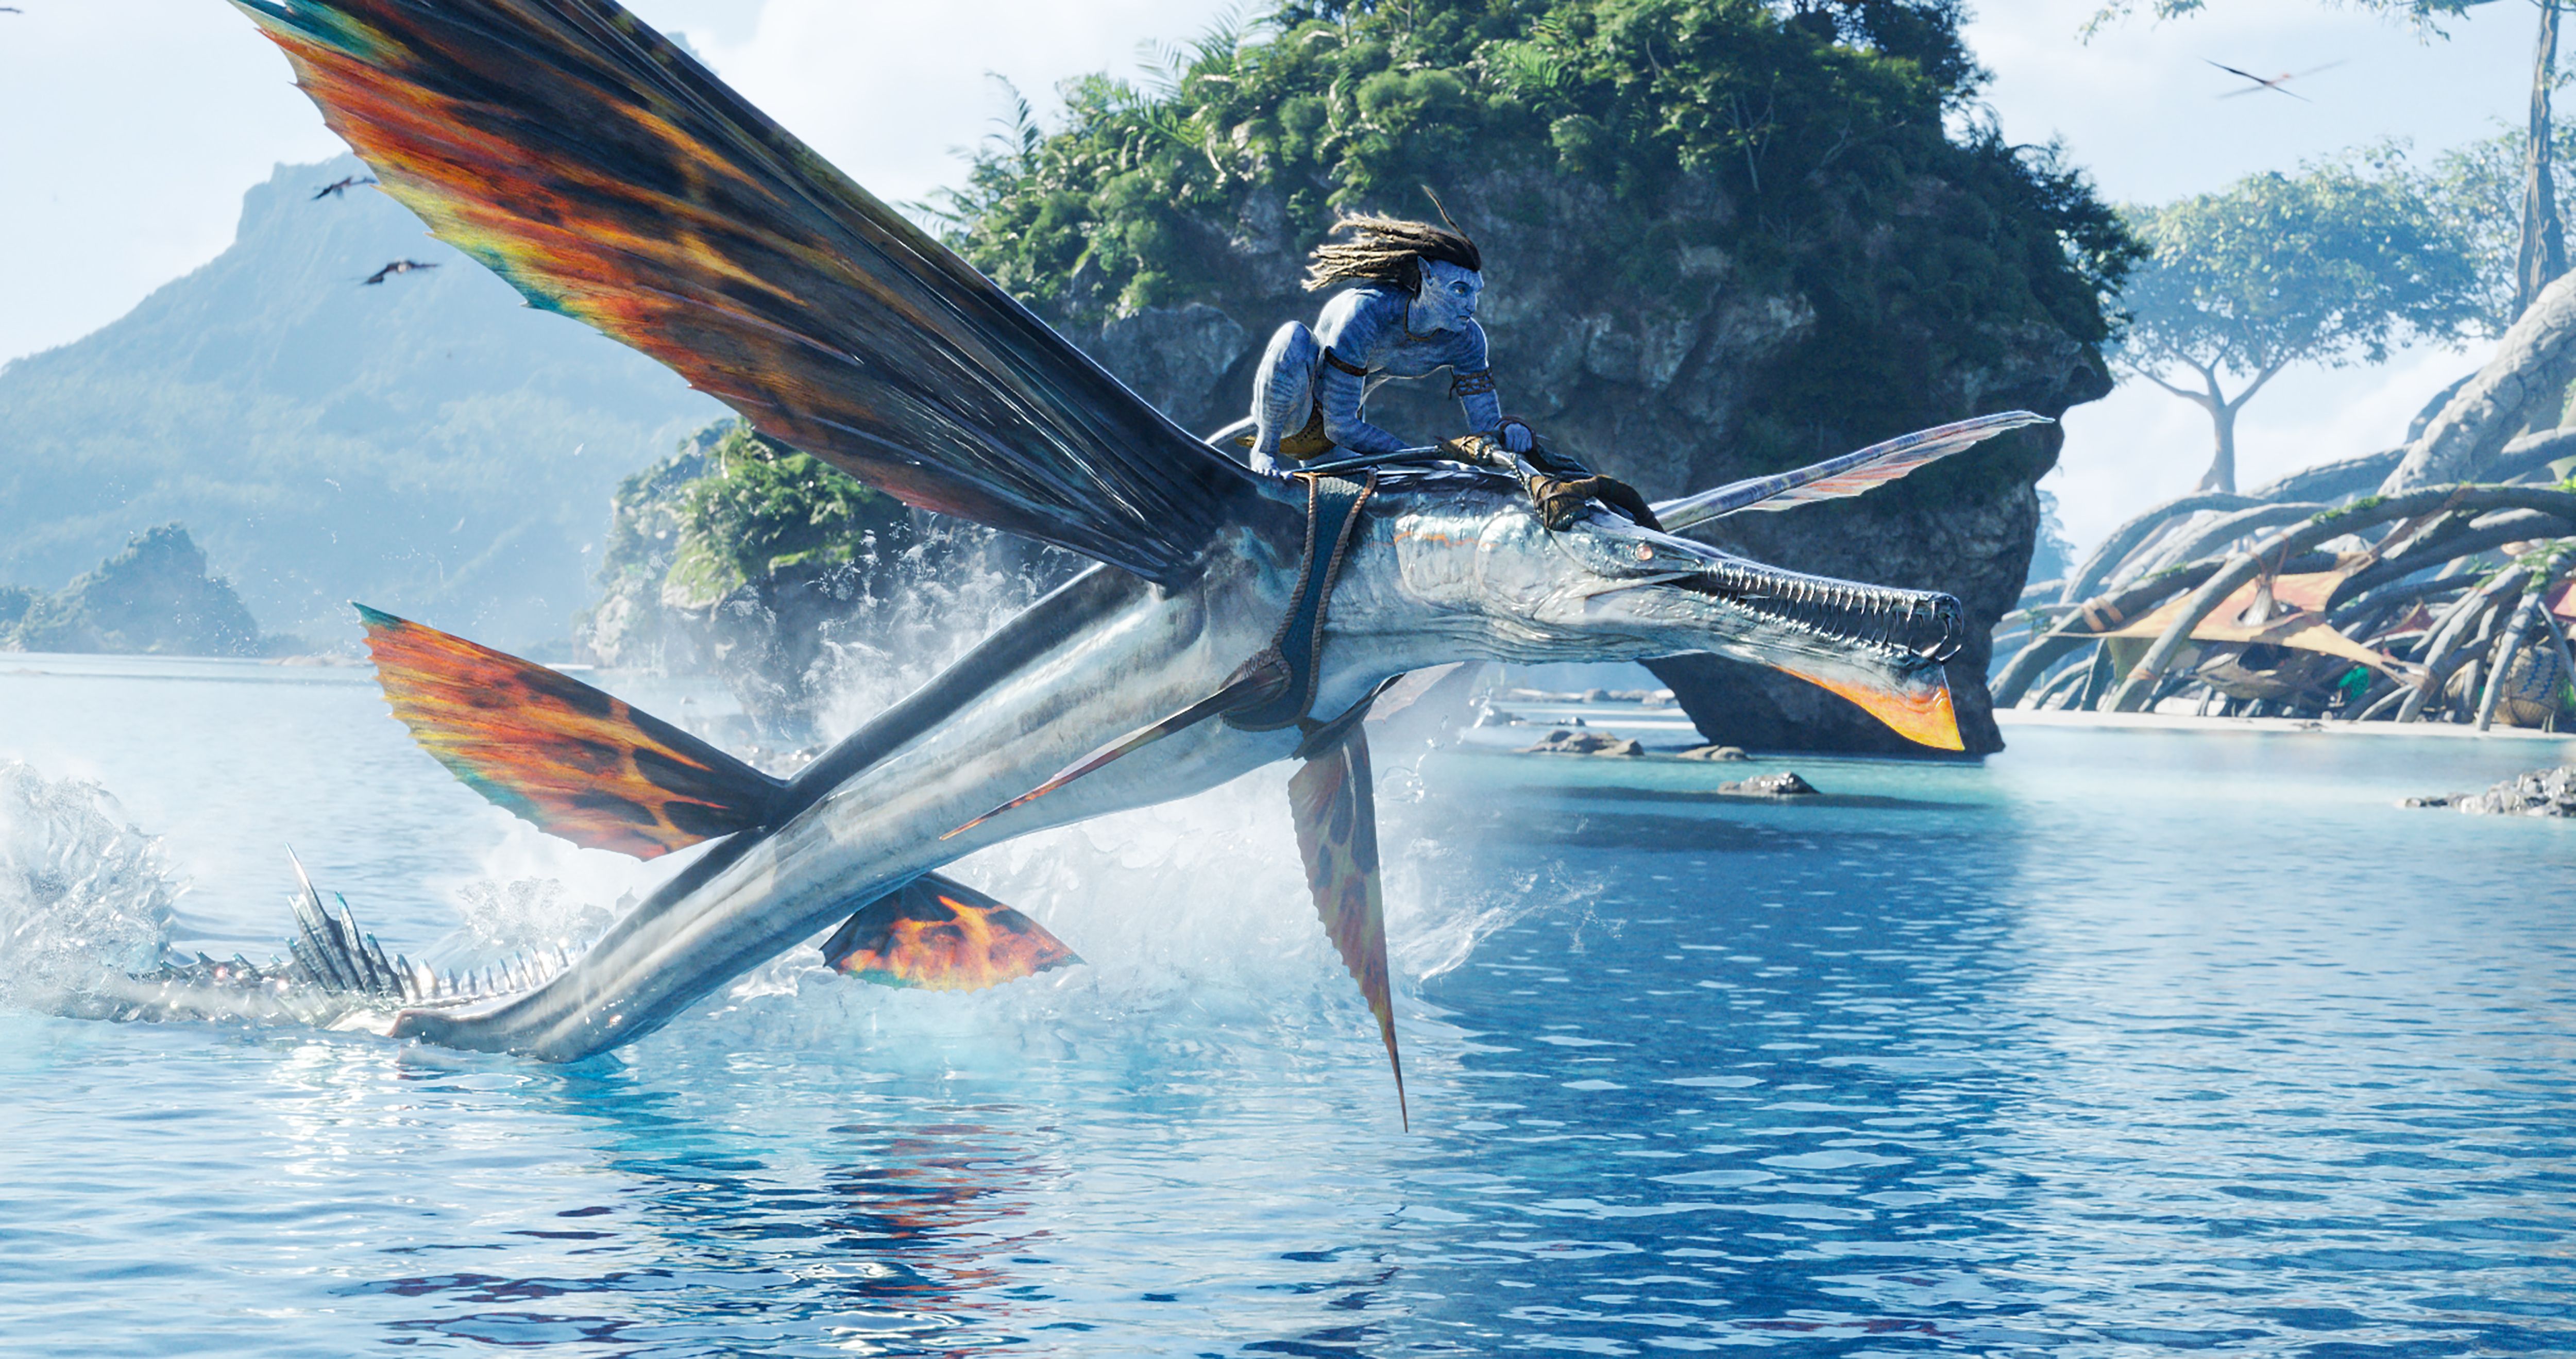 Avatar The Way of Water makes 53M box office splash